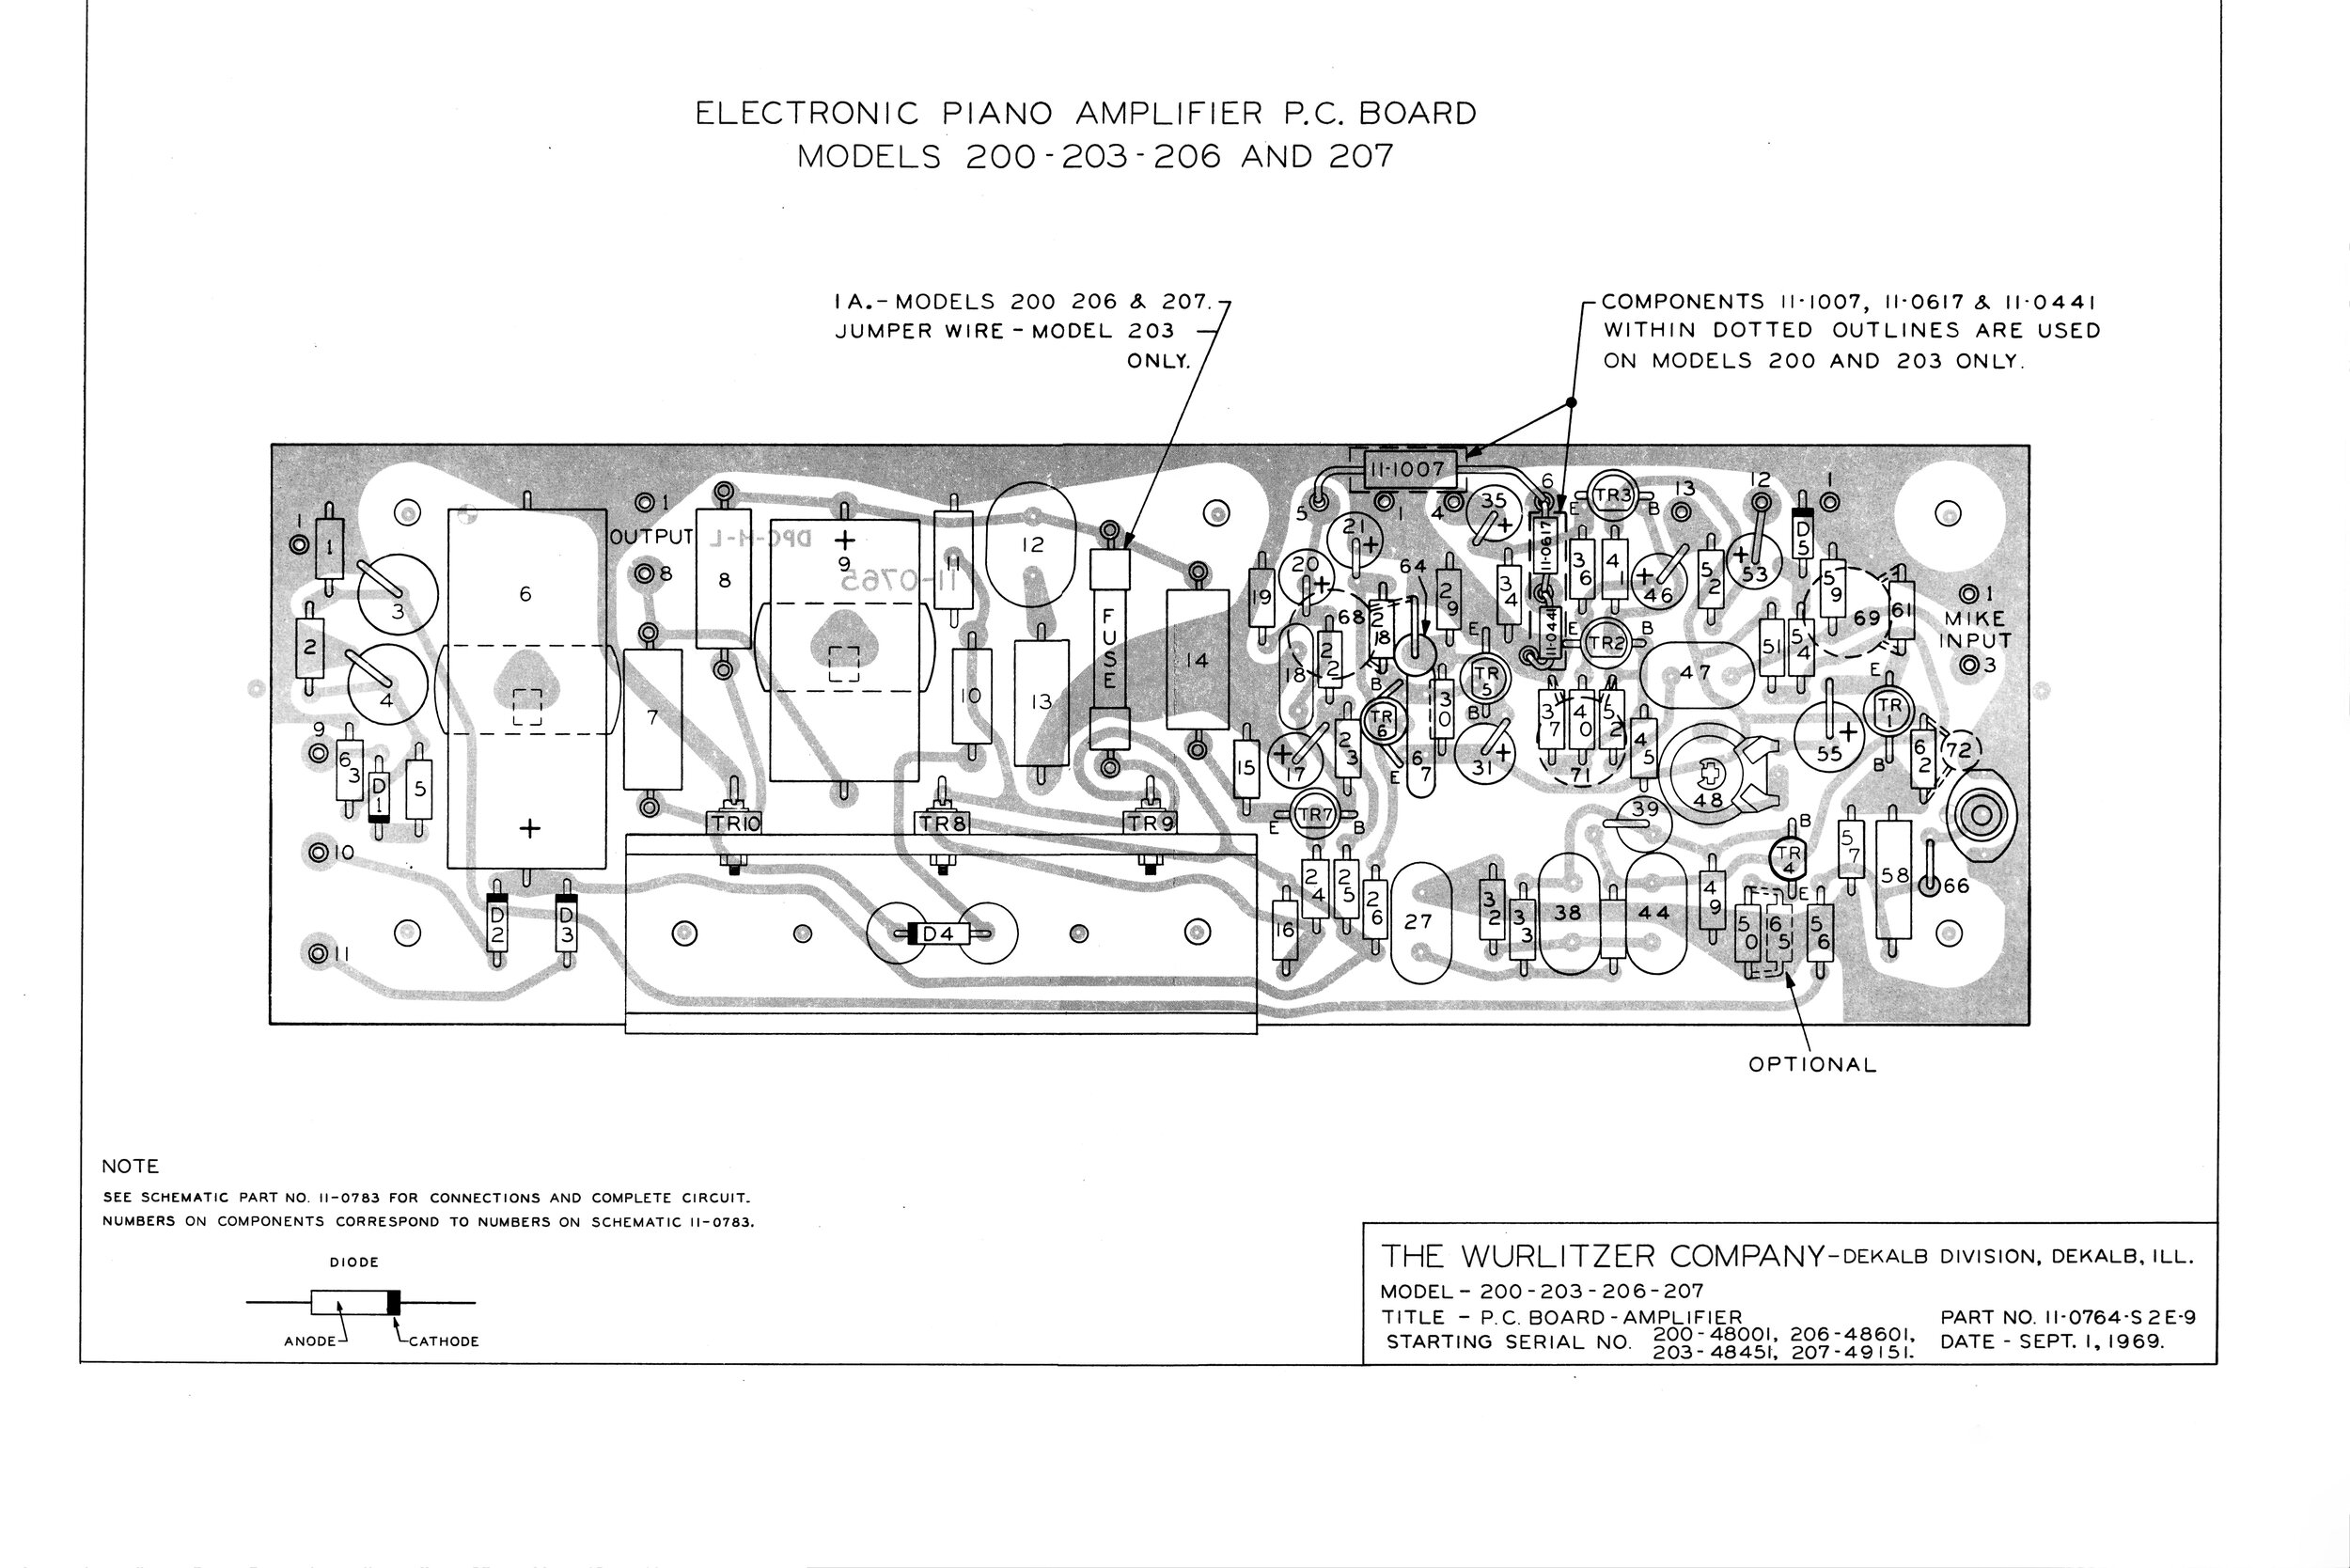 Wurlitzer 200 amplifier circuit board schematic